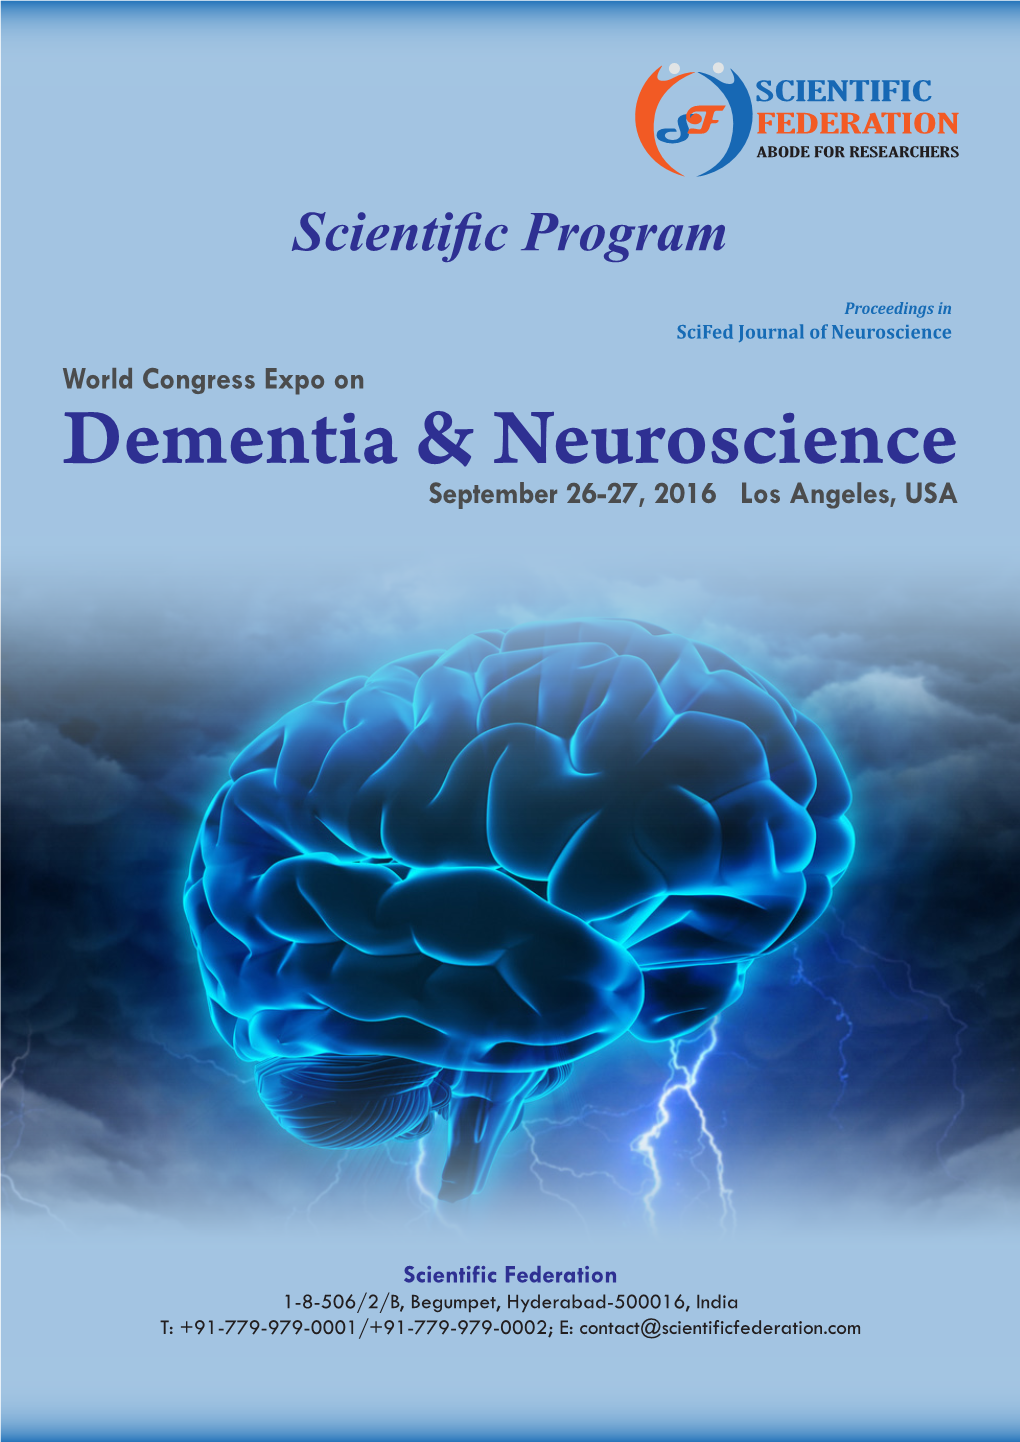 Dementia & Neuroscience